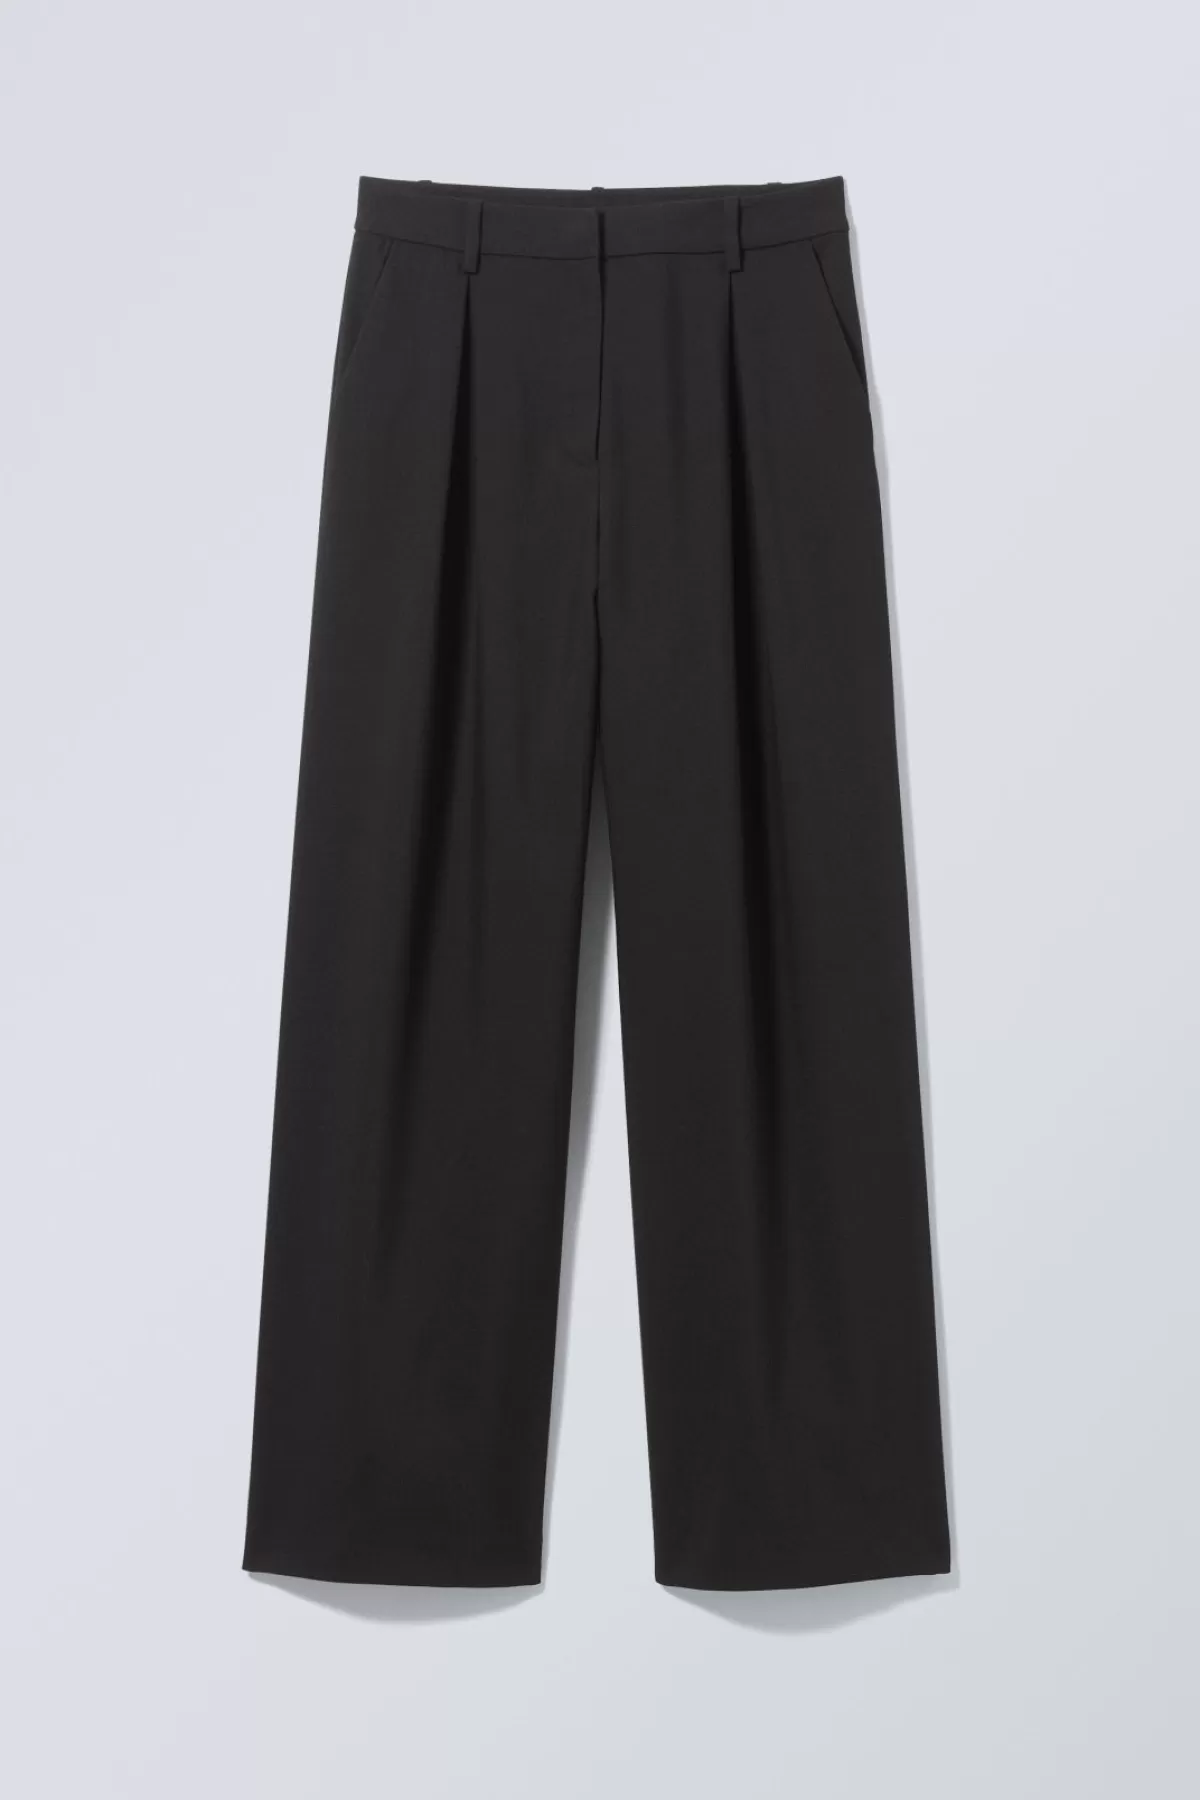 Weekday Zia Suit Trousers Black Online